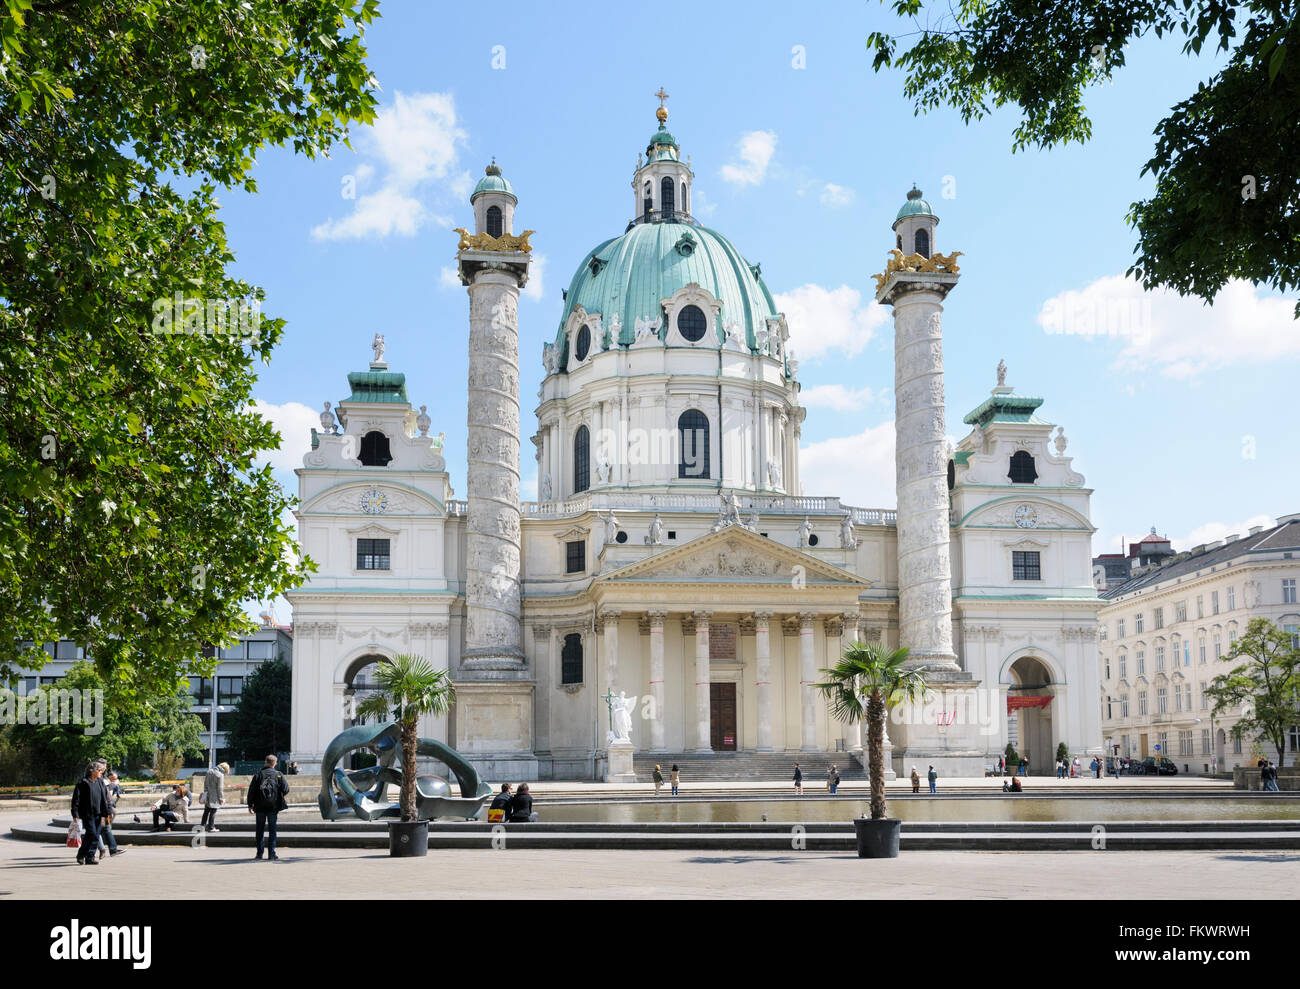 The Baroque style Karlskirche (St Charles's church), Karlsplatz, Vienna, Austria Stock Photo